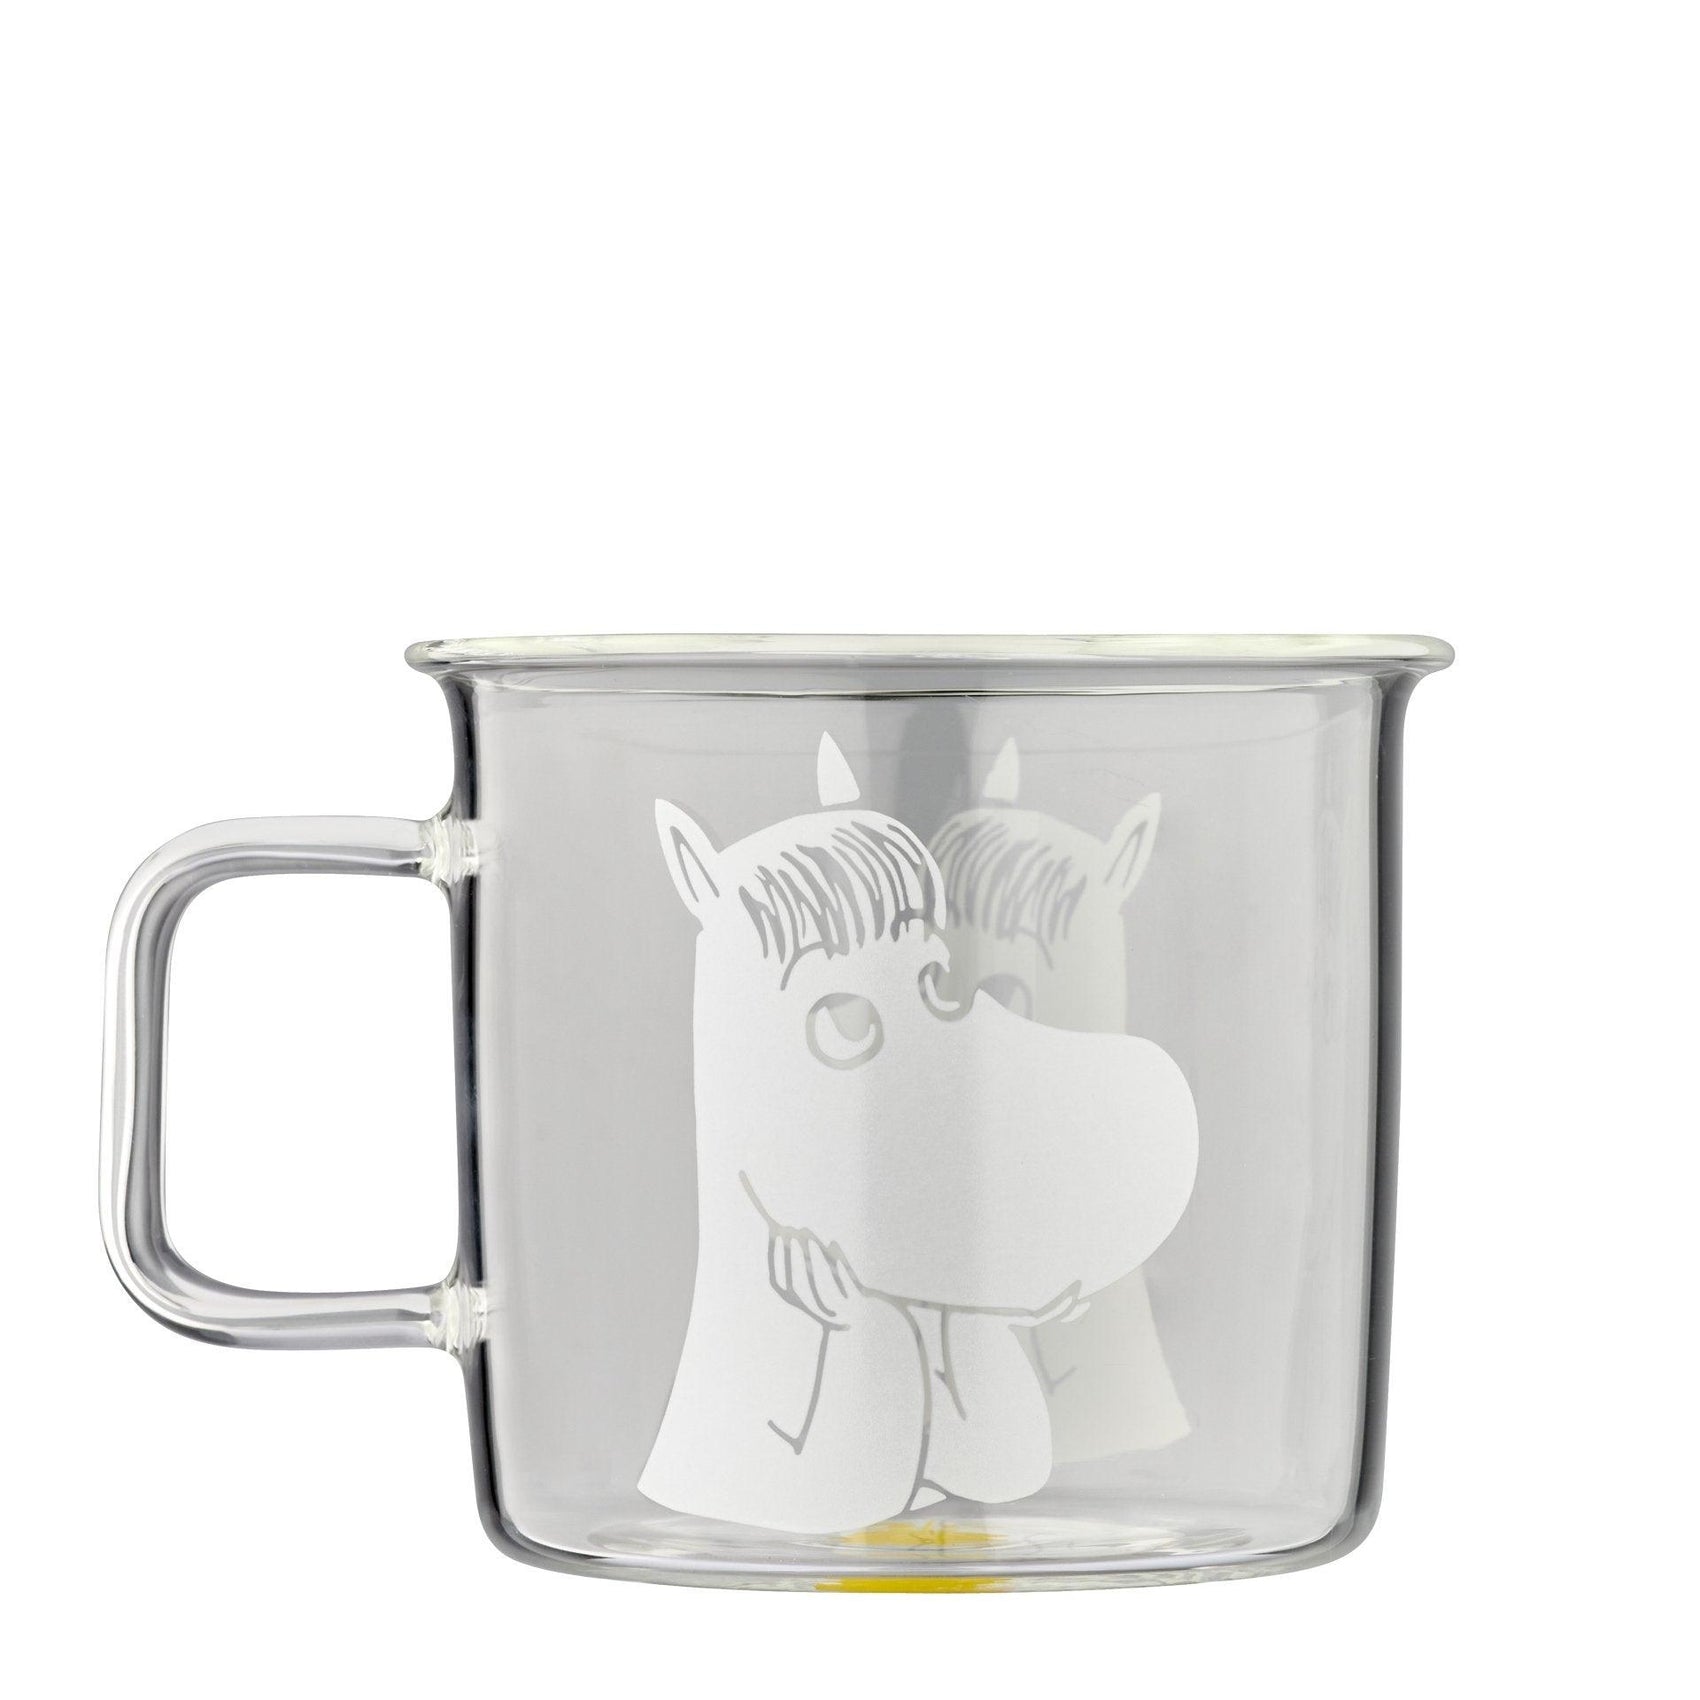 The Moomintrolls glass mug 3.5dl Snorkfrøken, clear